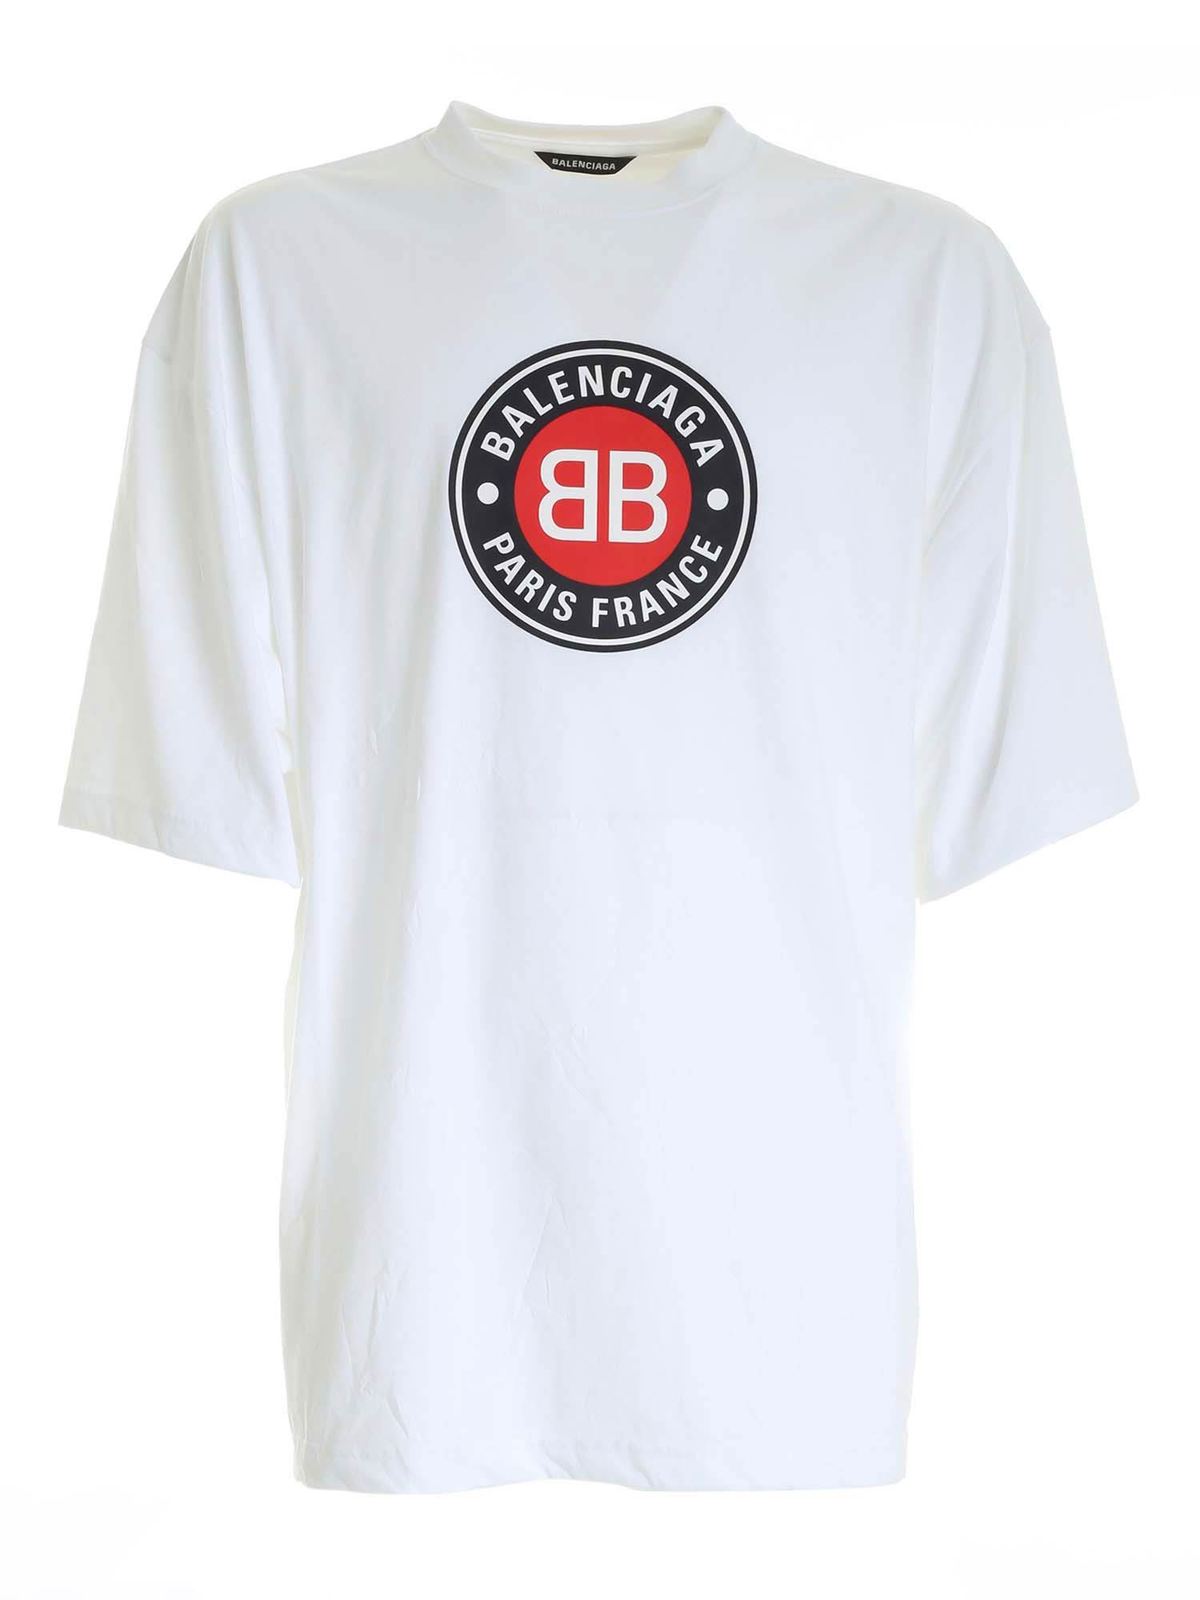 Som regel Afslut alene T-shirts Balenciaga - Oversized T-shirt with BB logo in white -  641614TJV769000